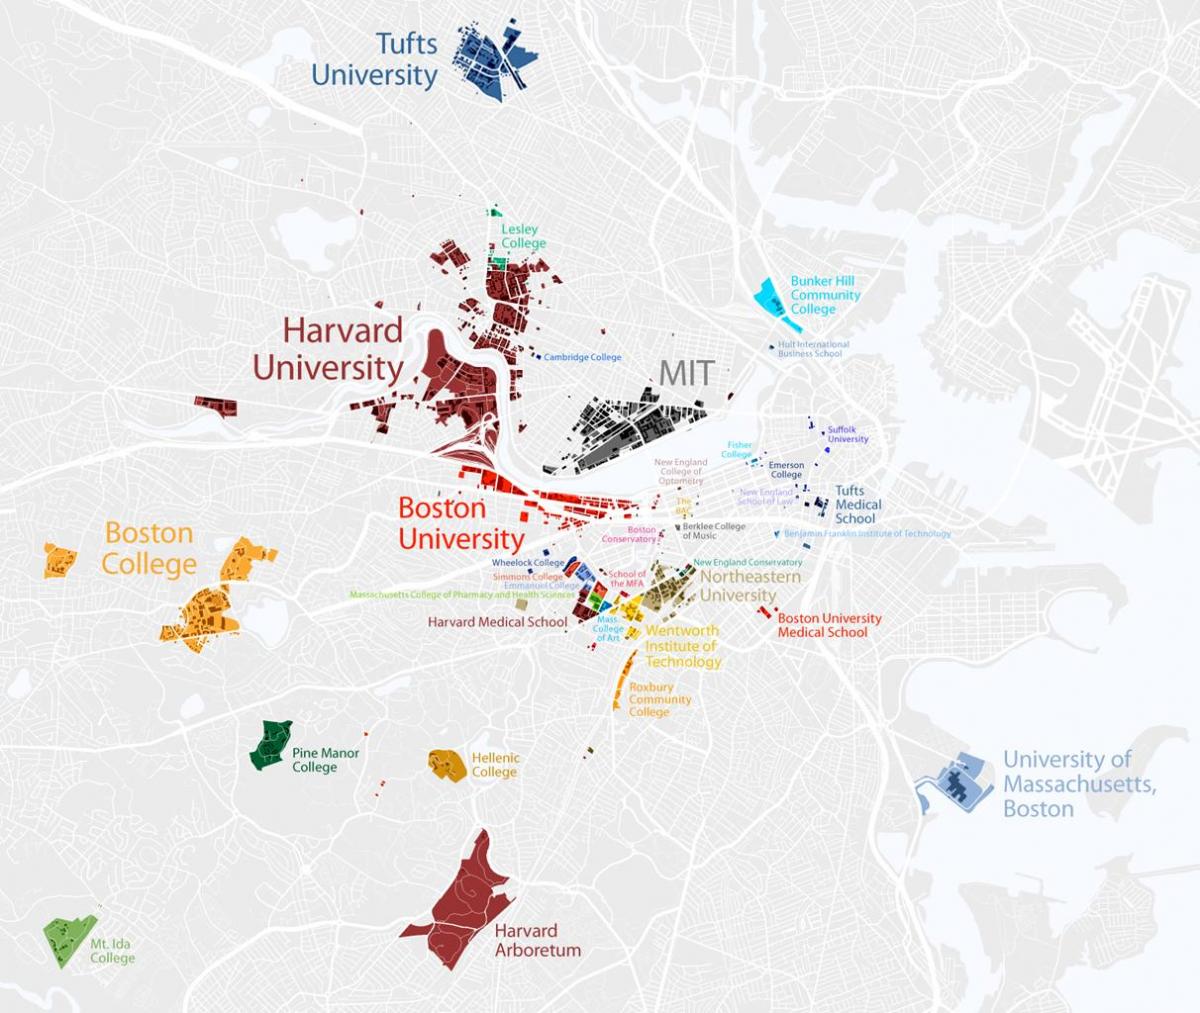 kort over Boston university